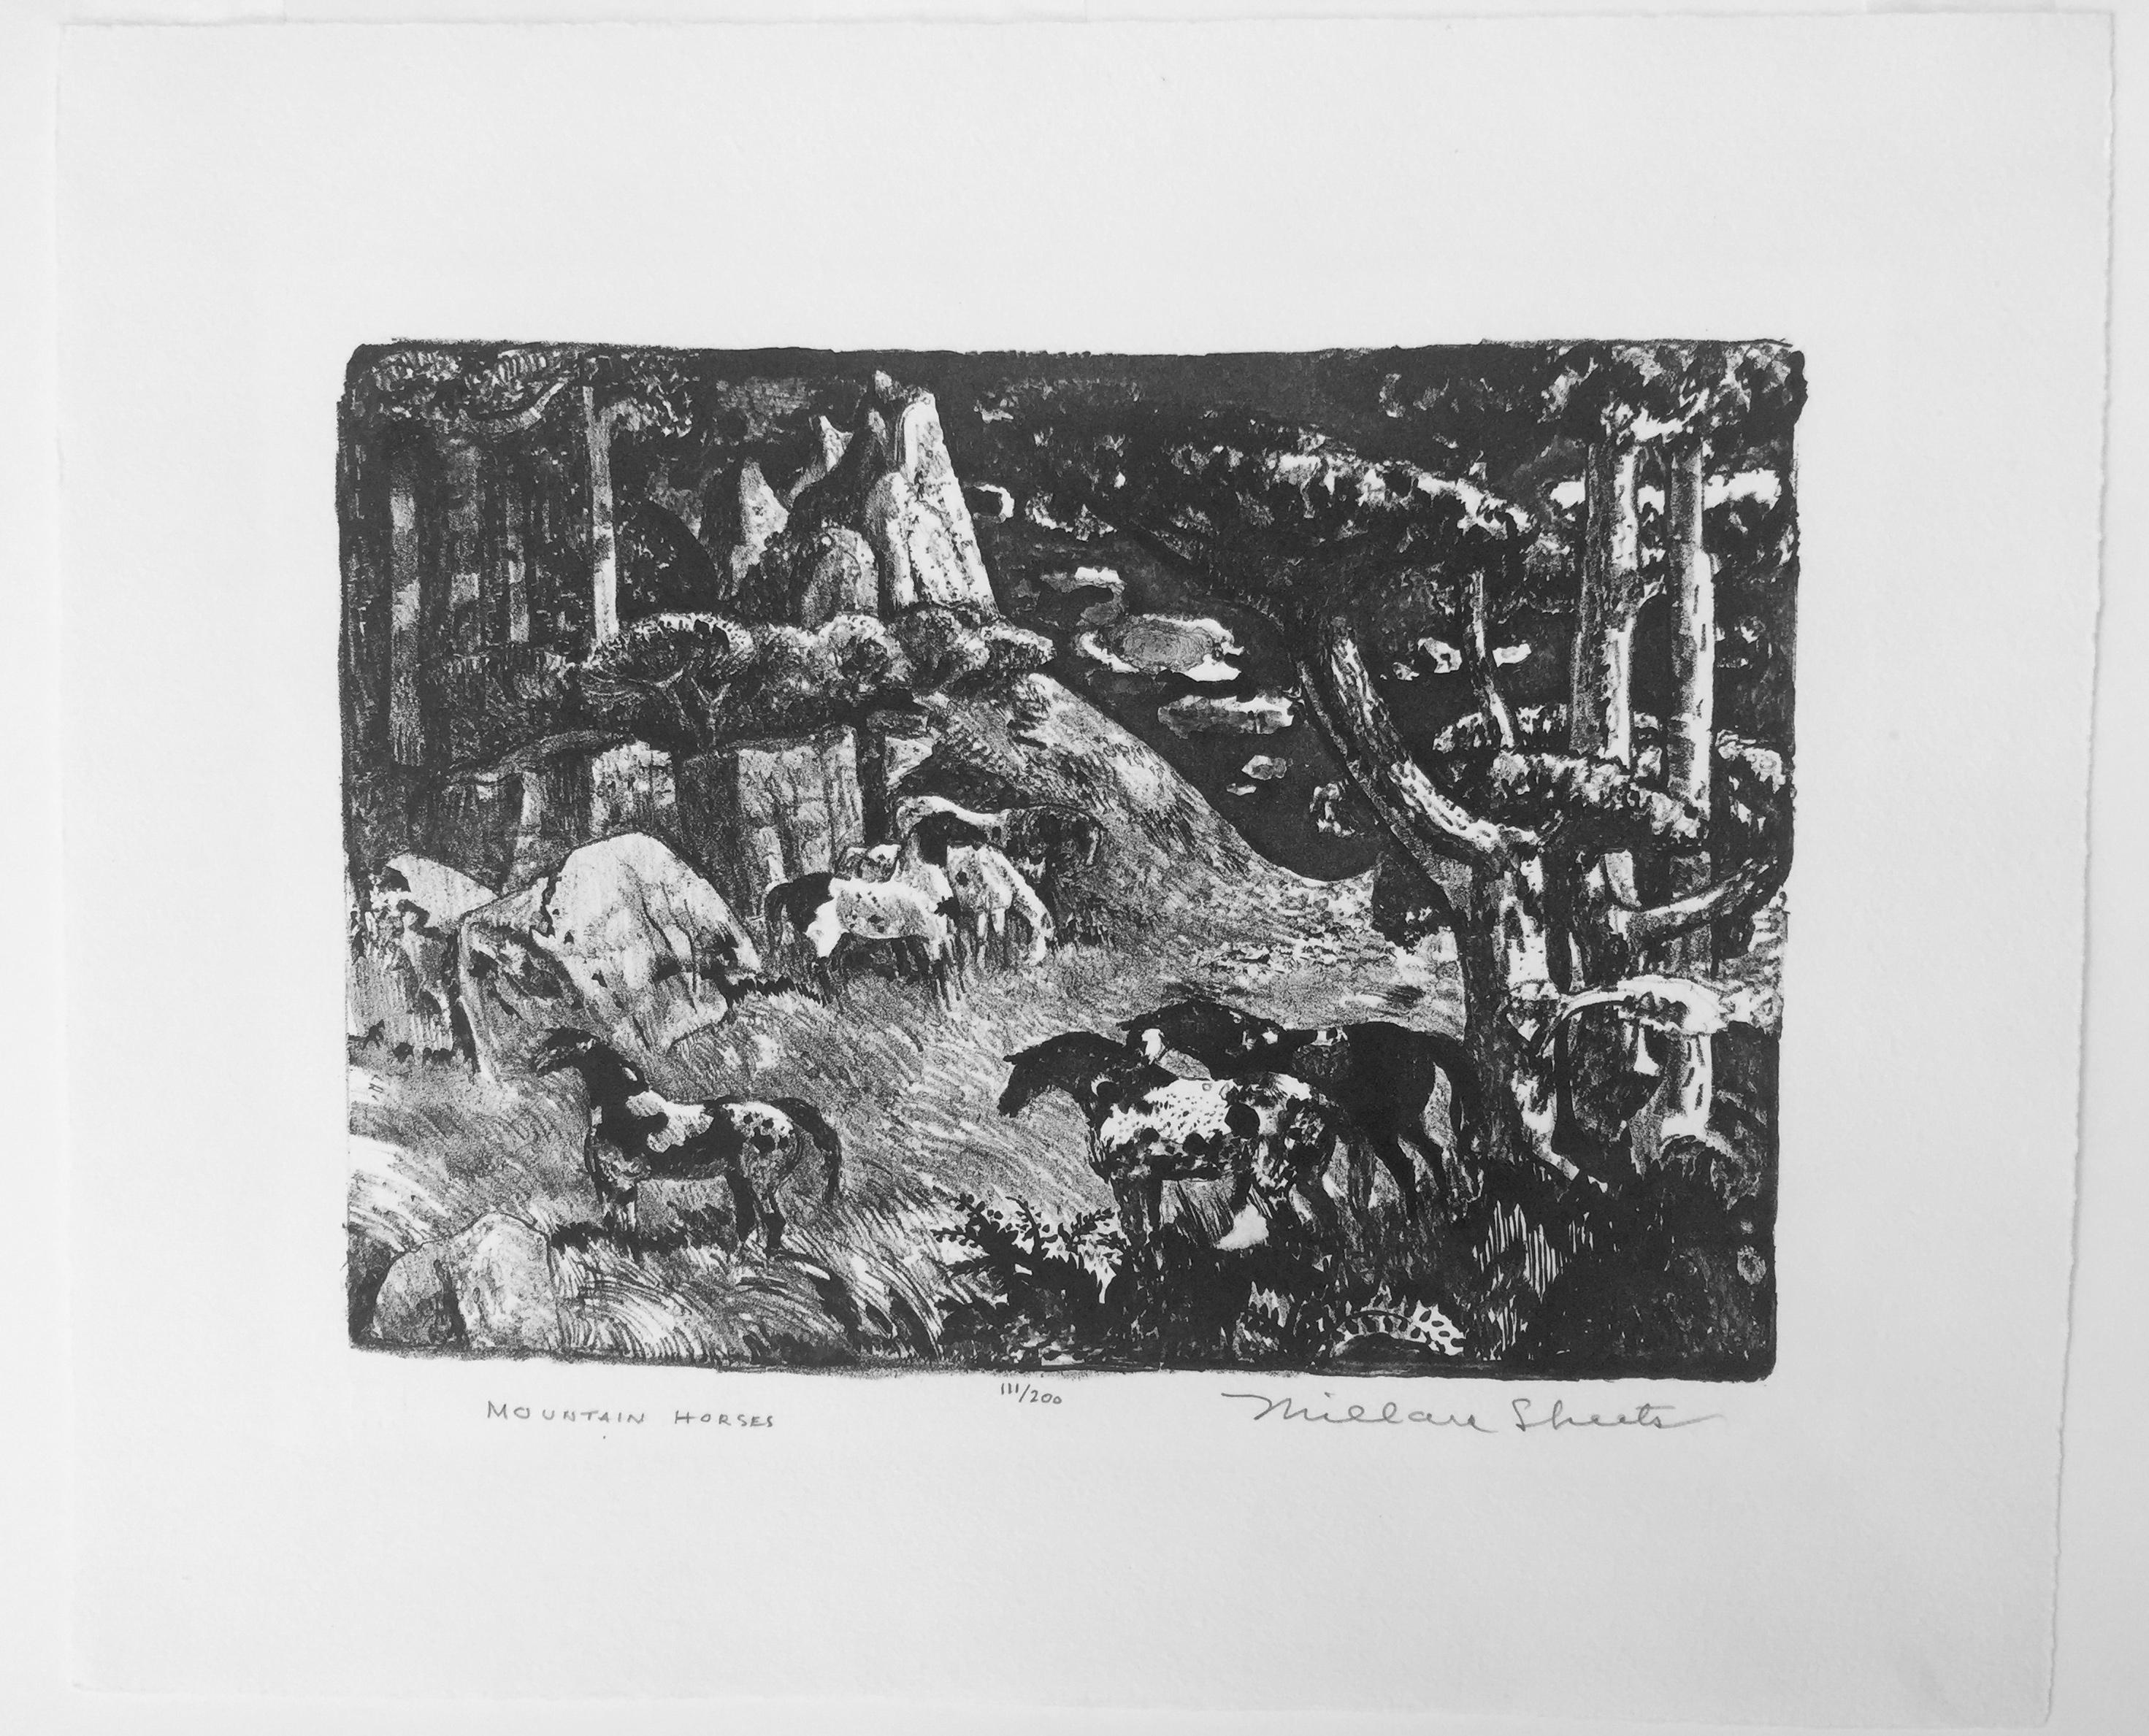 MOUNTAIN HORSES - Print by Millard Sheets